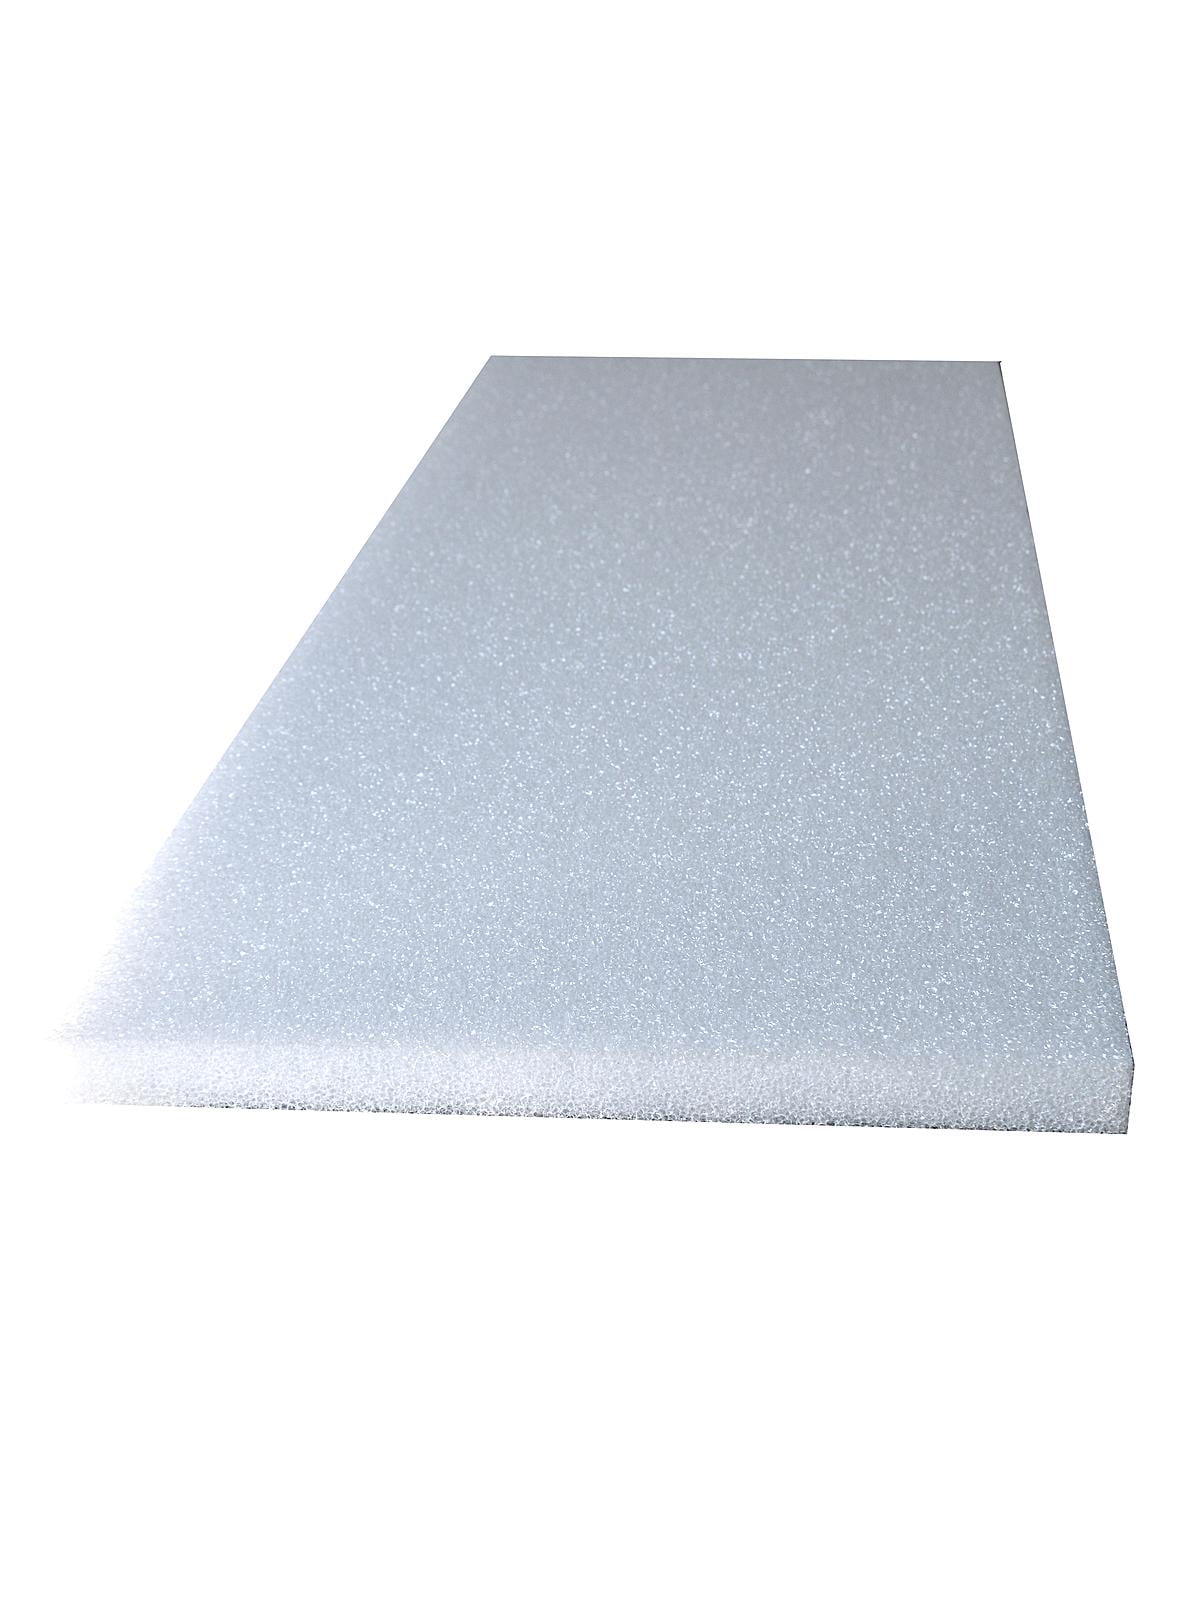 Polylamb Foam Sheets – Pathe Shipping